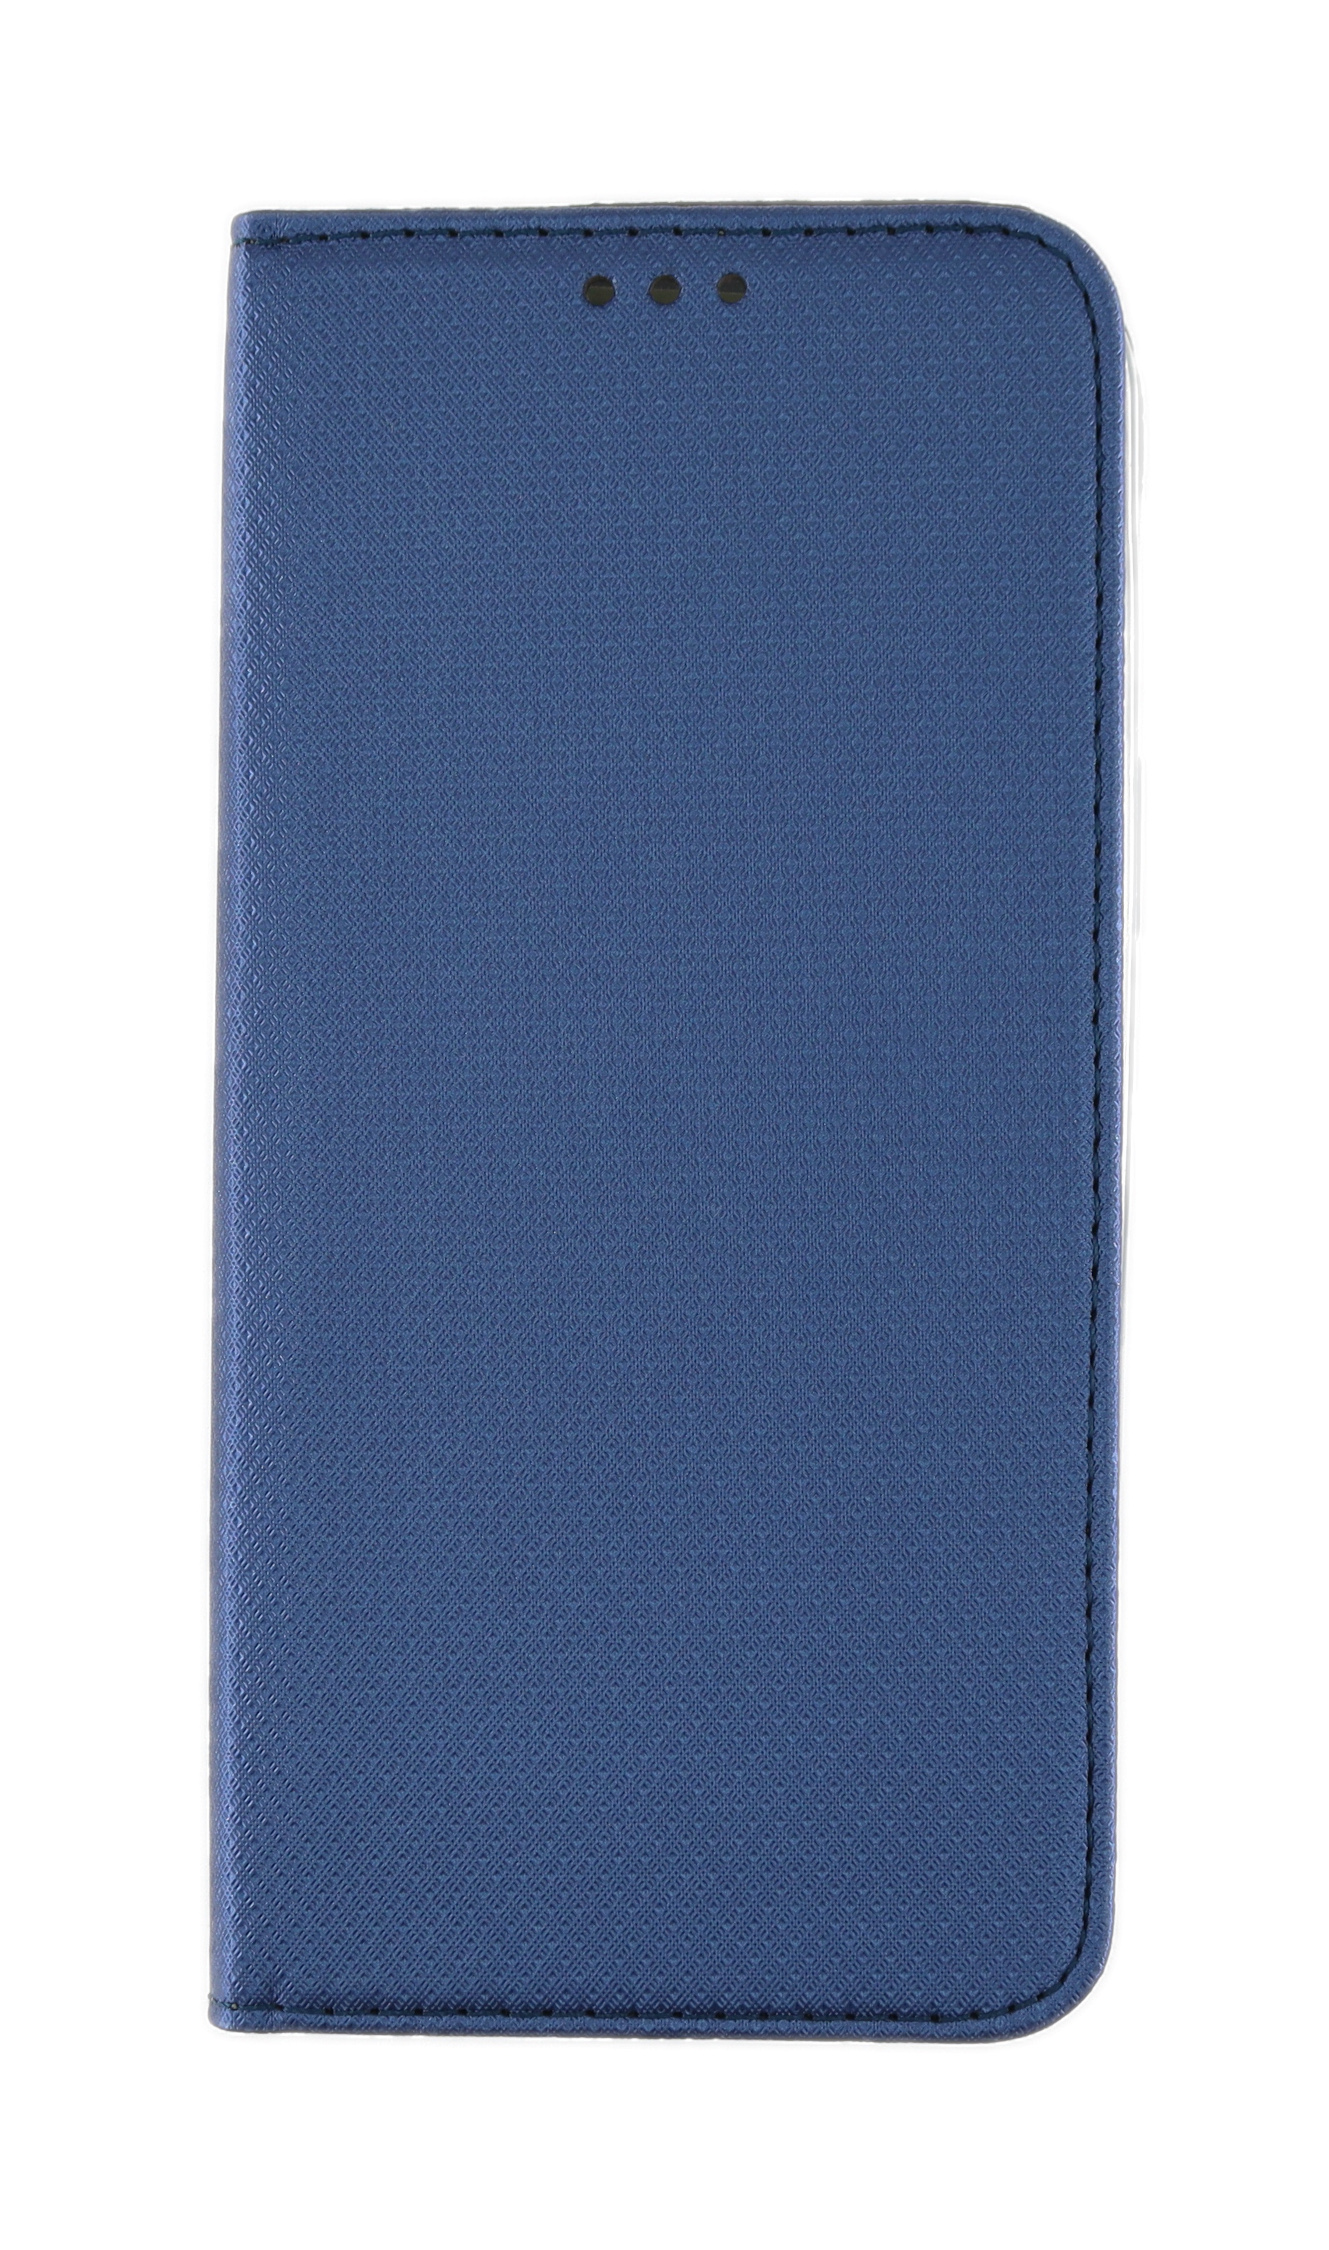 Marineblau Texture, JAMCOVER 7a, Bookcase Google, Bookcover, Pixel